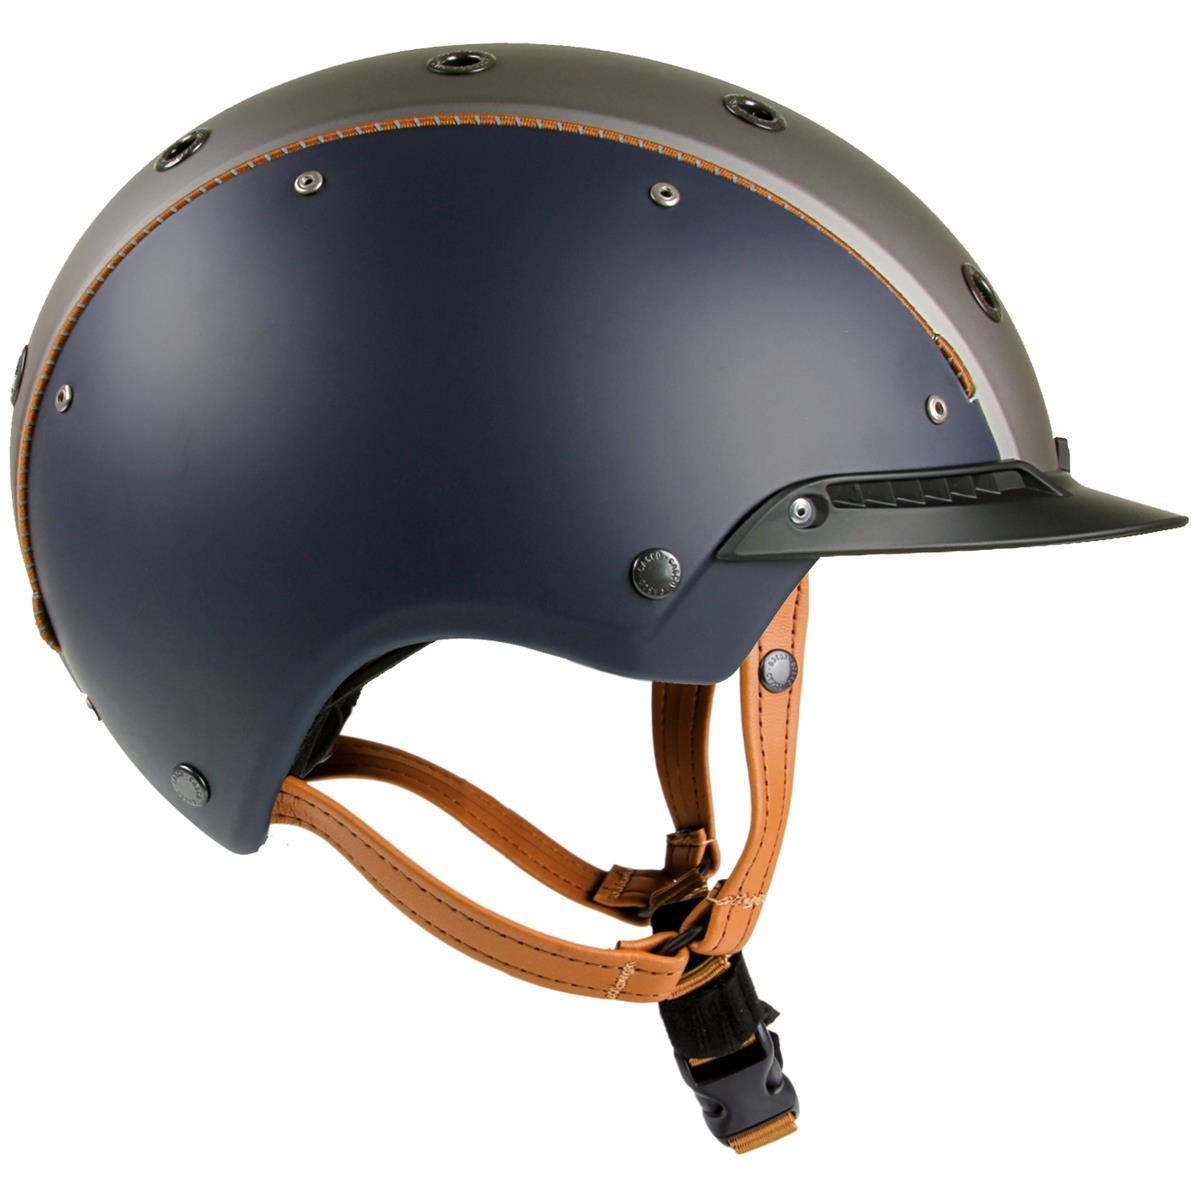 Casco CHAMP 3 riding helmet